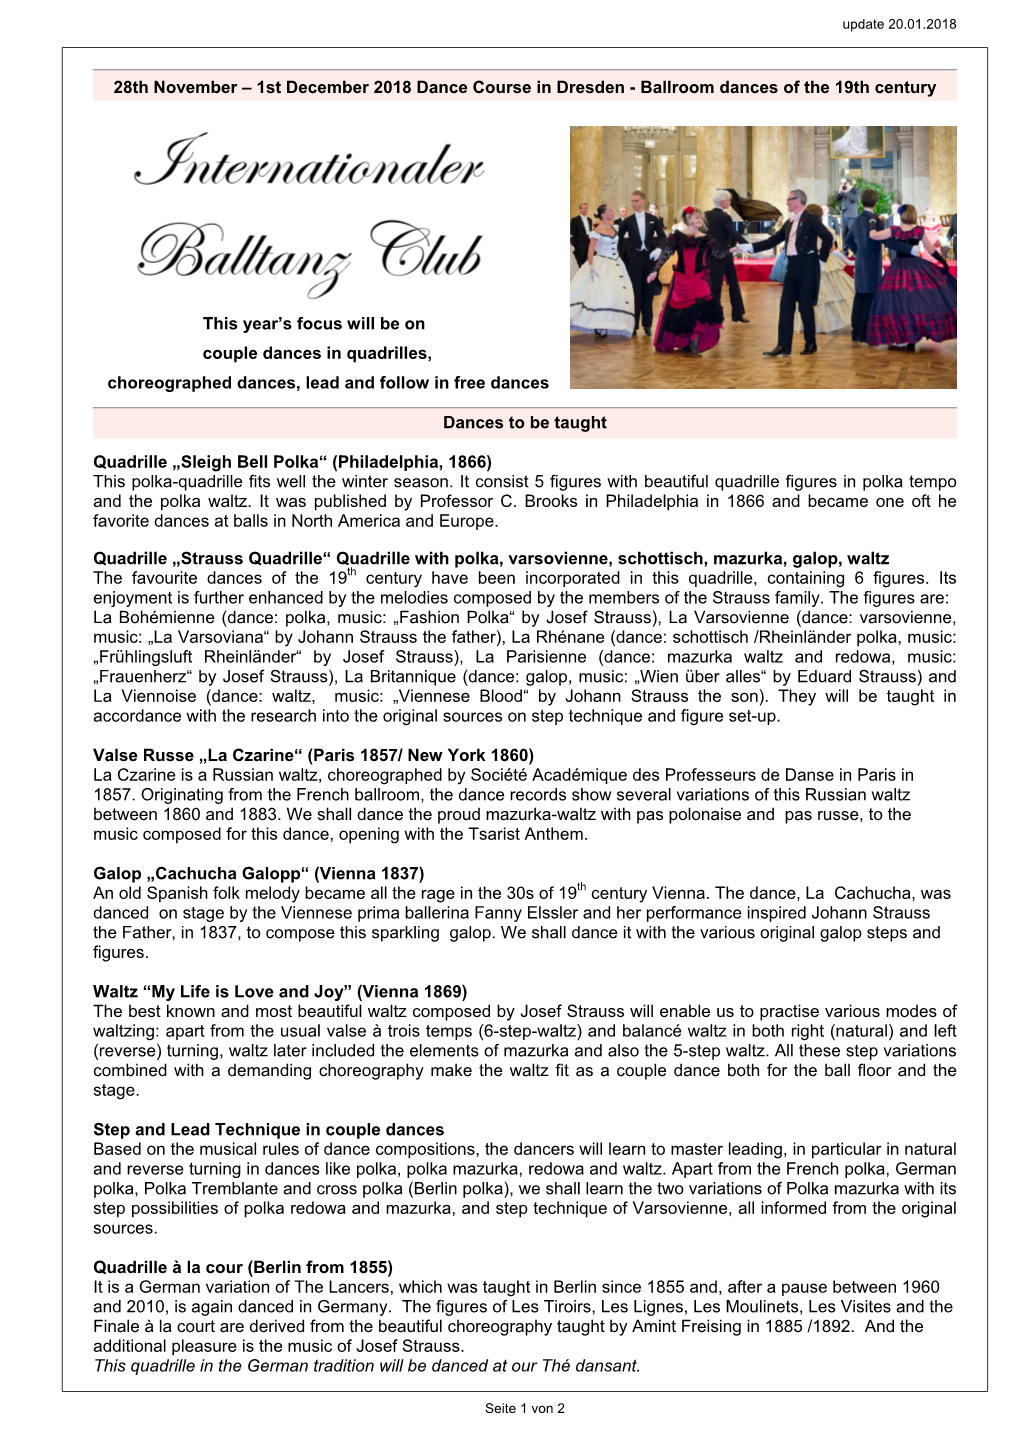 28Th November – 1St December 2018 Dance Course in Dresden - Ballroom Dances of the 19Th Century